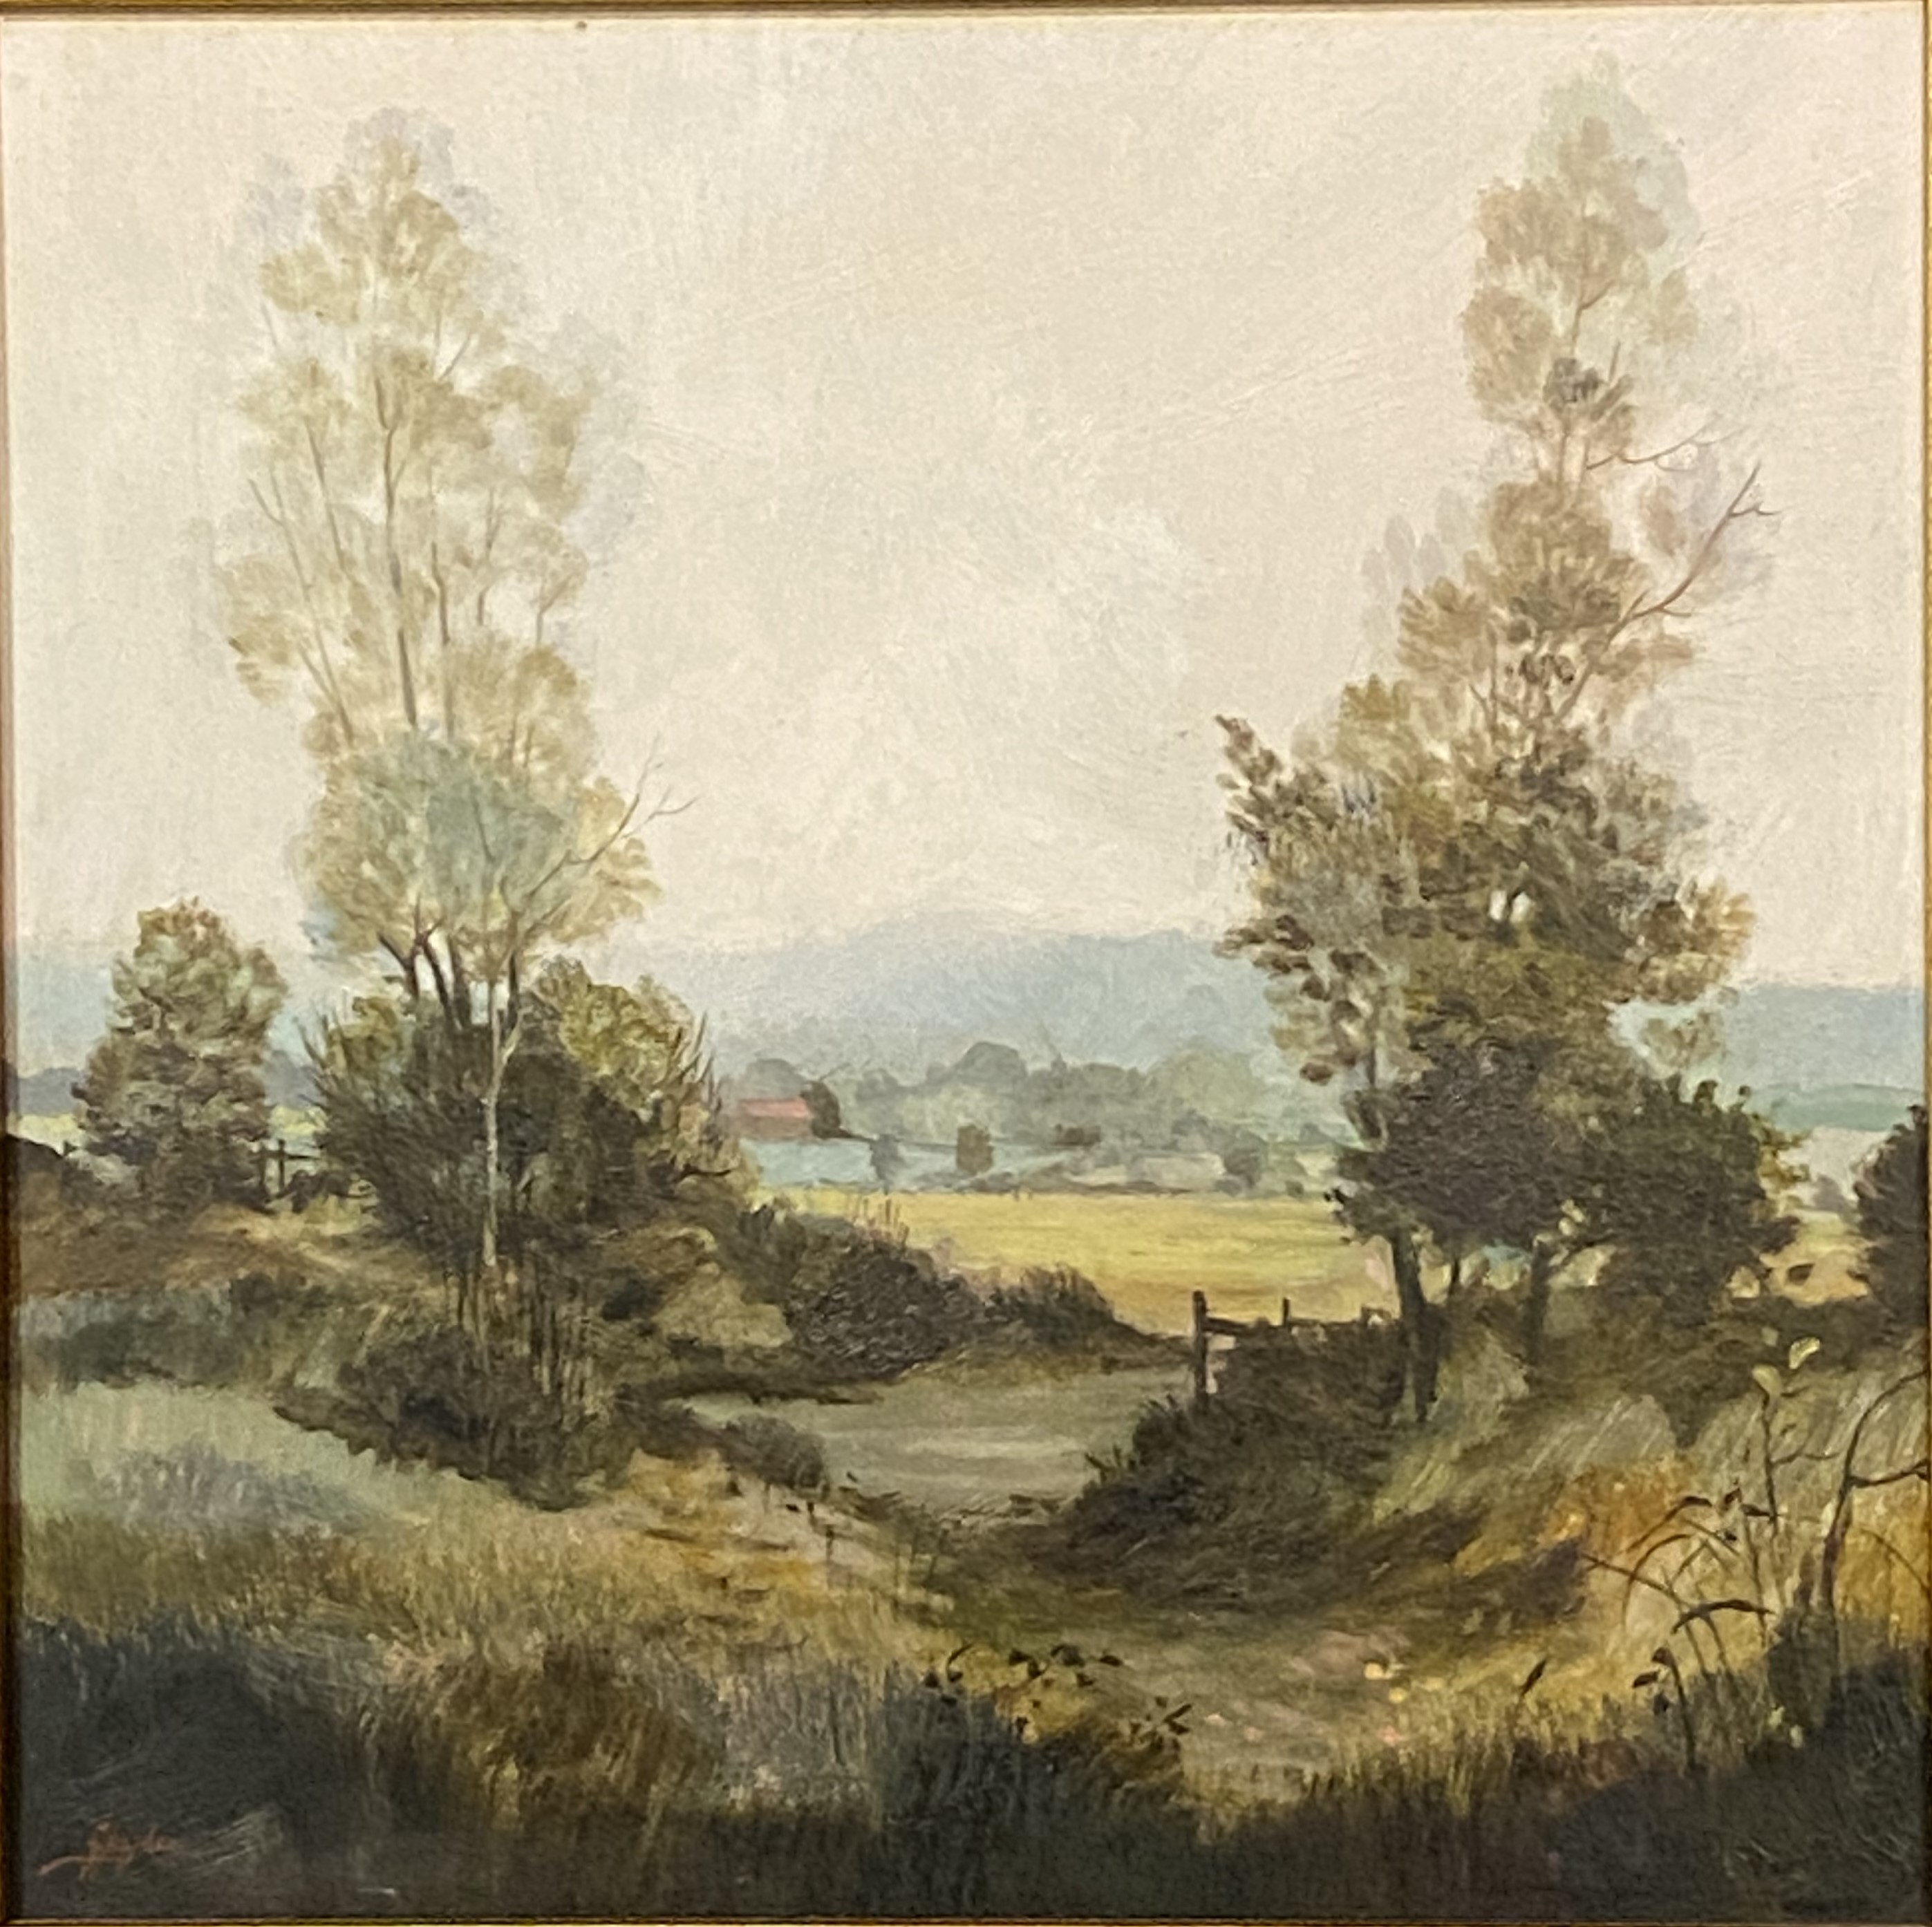 Framed oil on board of a landscape signed by artist, G Hughes